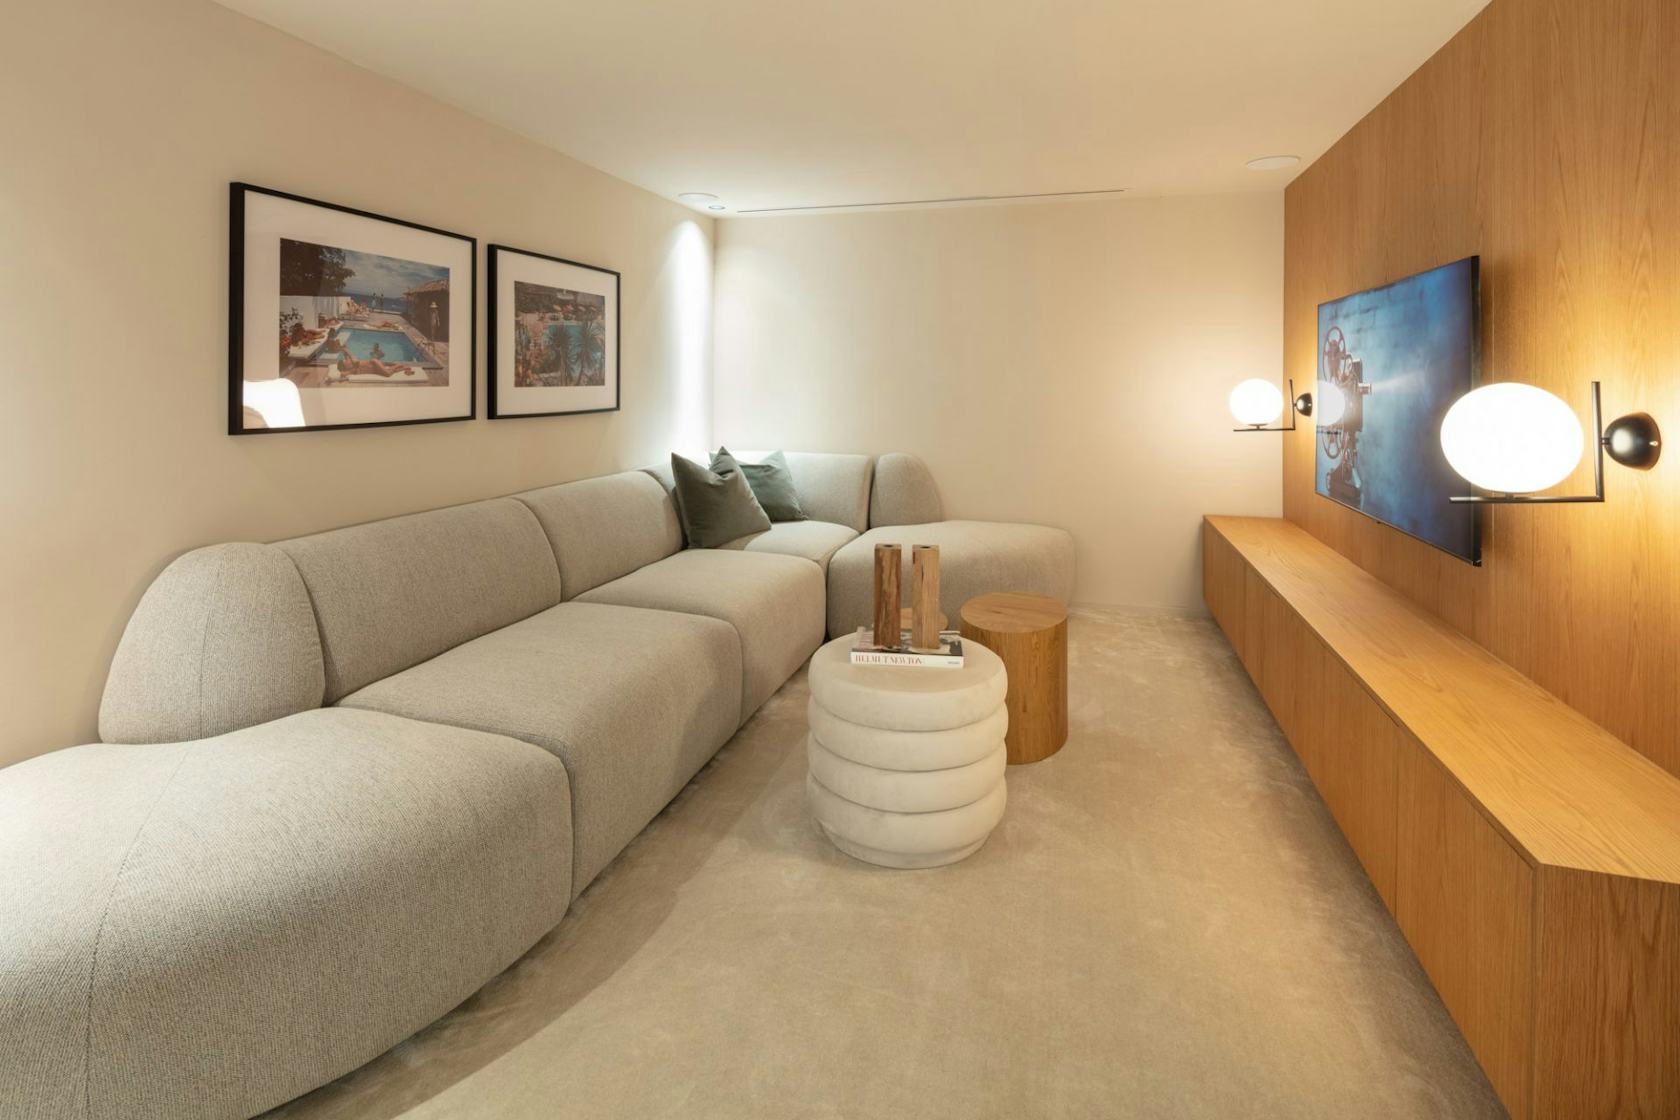 corner living room furniture indoors couch home decor interior design lamp table floor